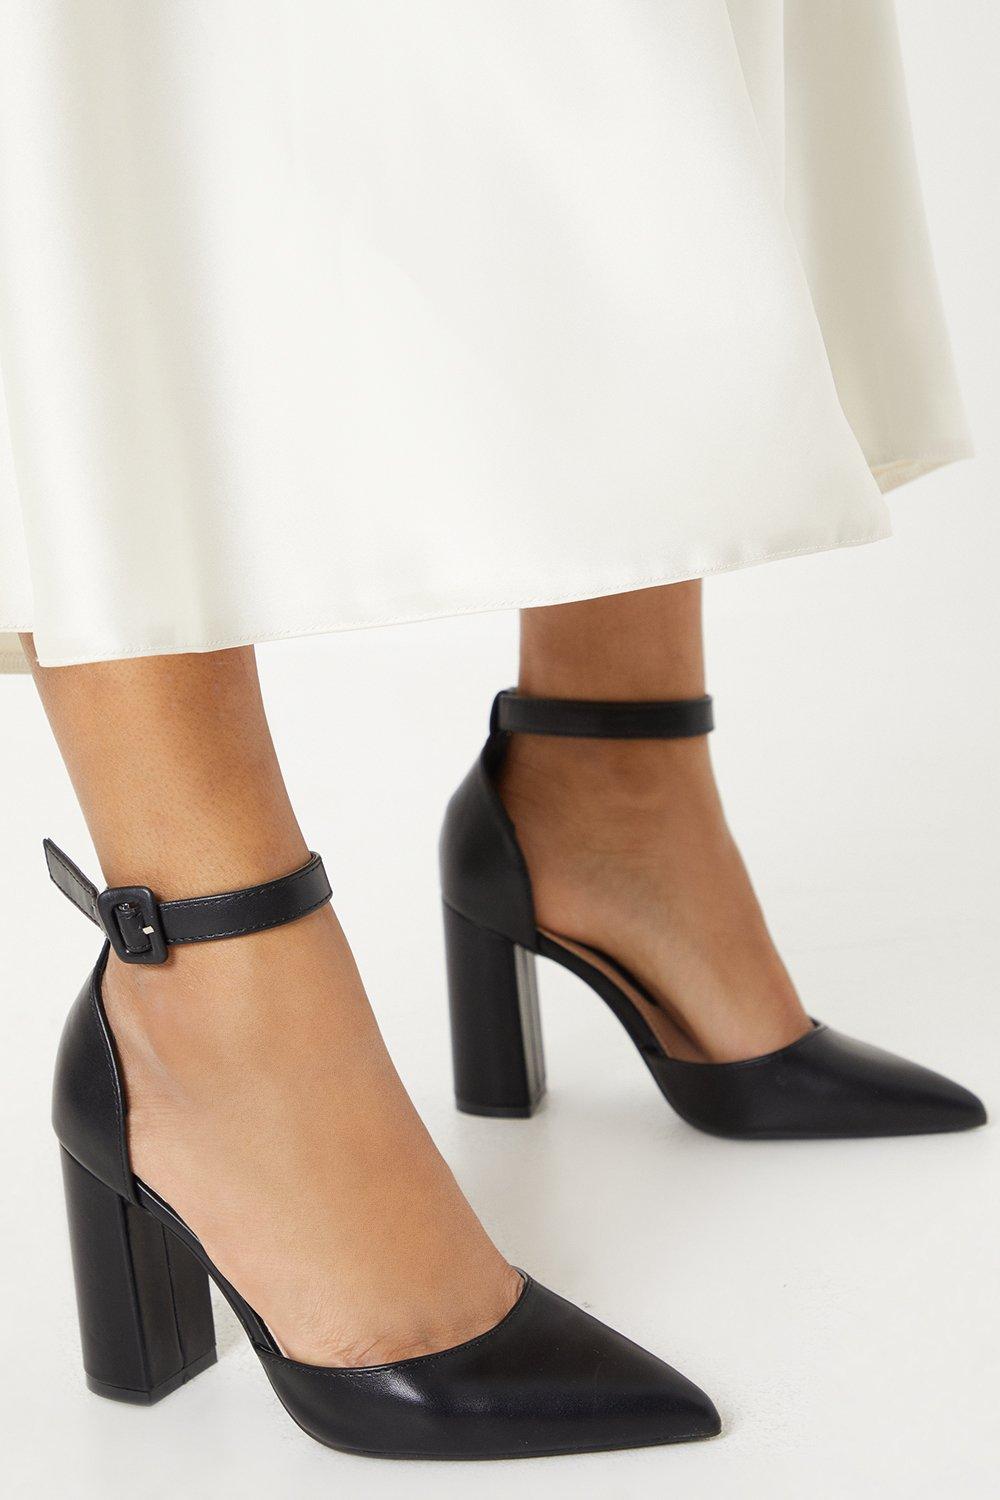 Women’s Faith: Carmi Ankle Strap High Block Heel Pointed Court Shoes - black - 3